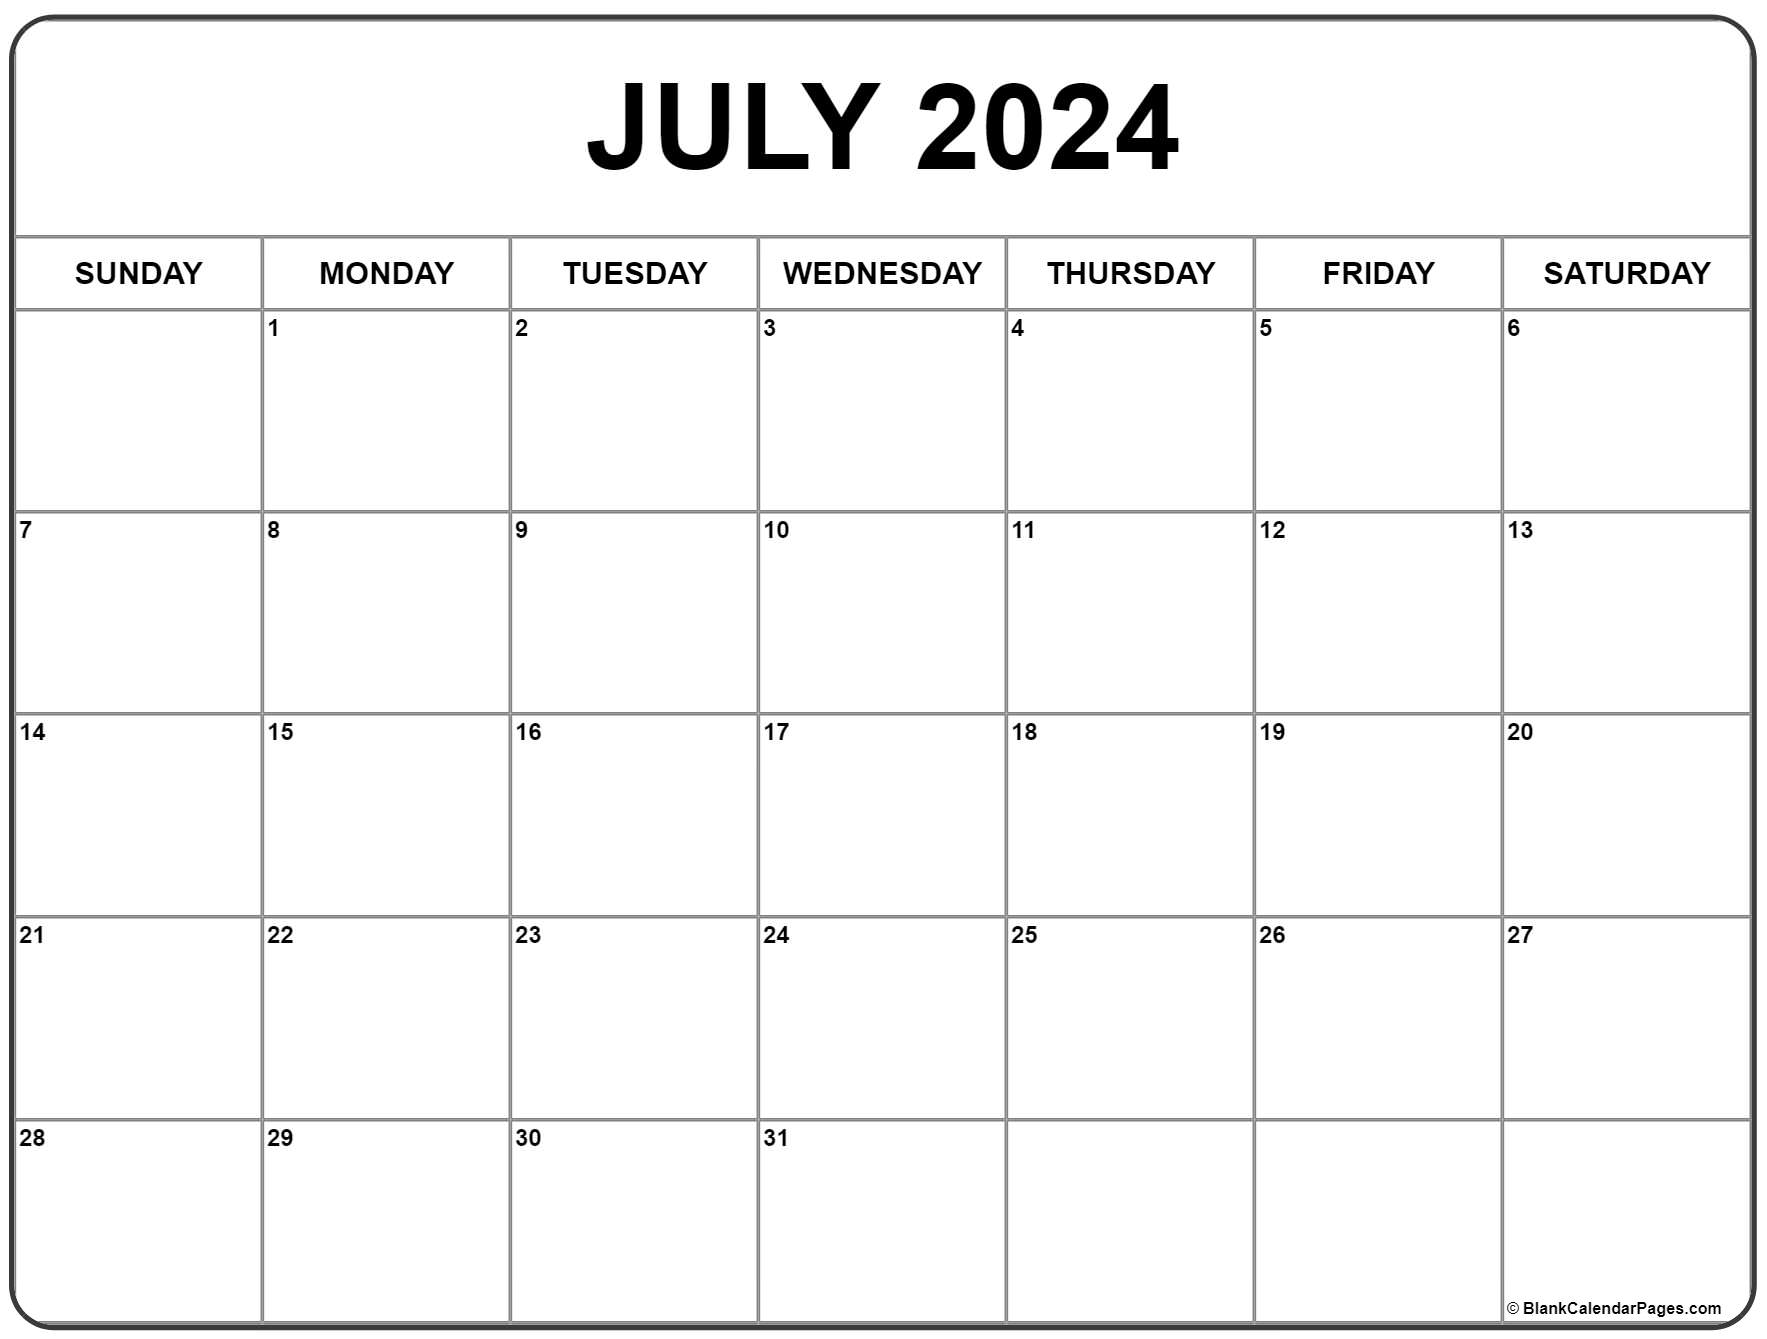 July Schedule 2022 July 2022 Calendar | Free Printable Calendar Templates